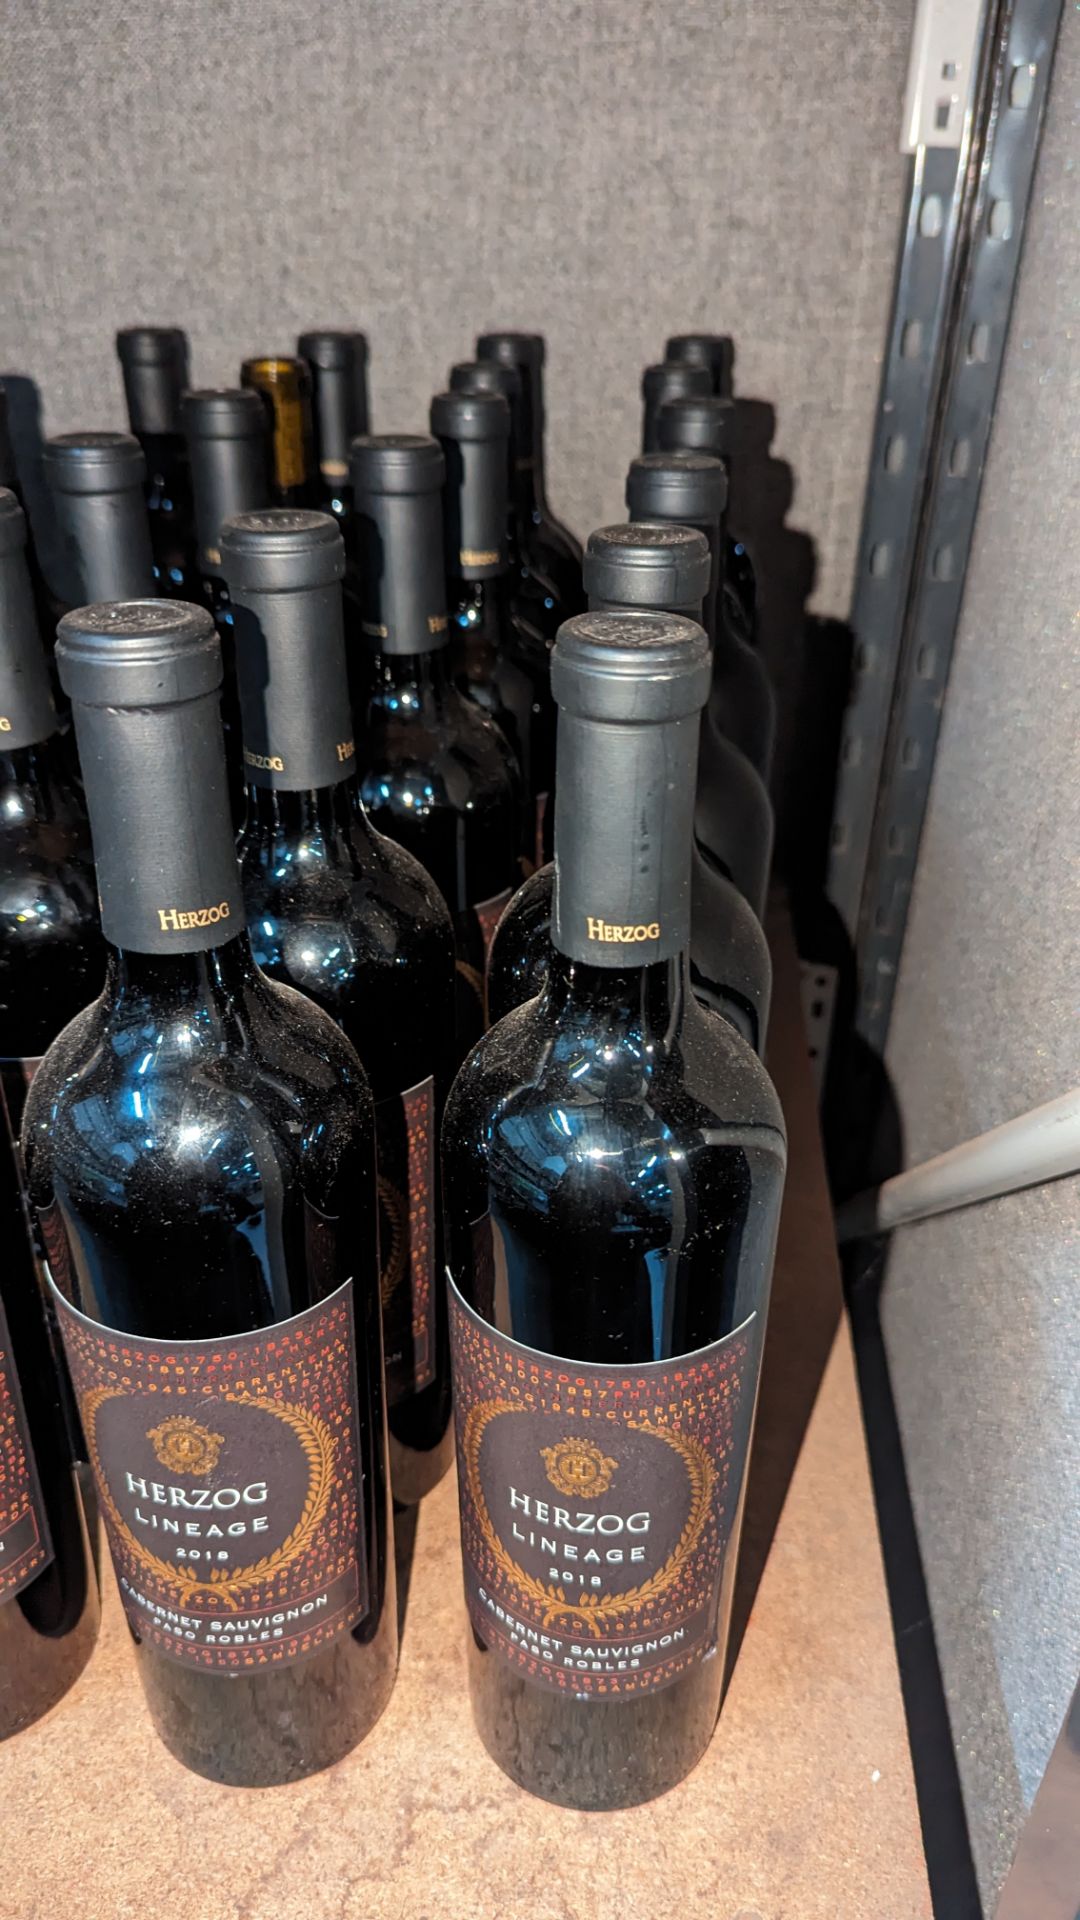 22 bottles of 2018 Herzog Lineage Cabernet Sauvignon Californian red wine & 1 bottle of 2017 Herzog - Image 5 of 6